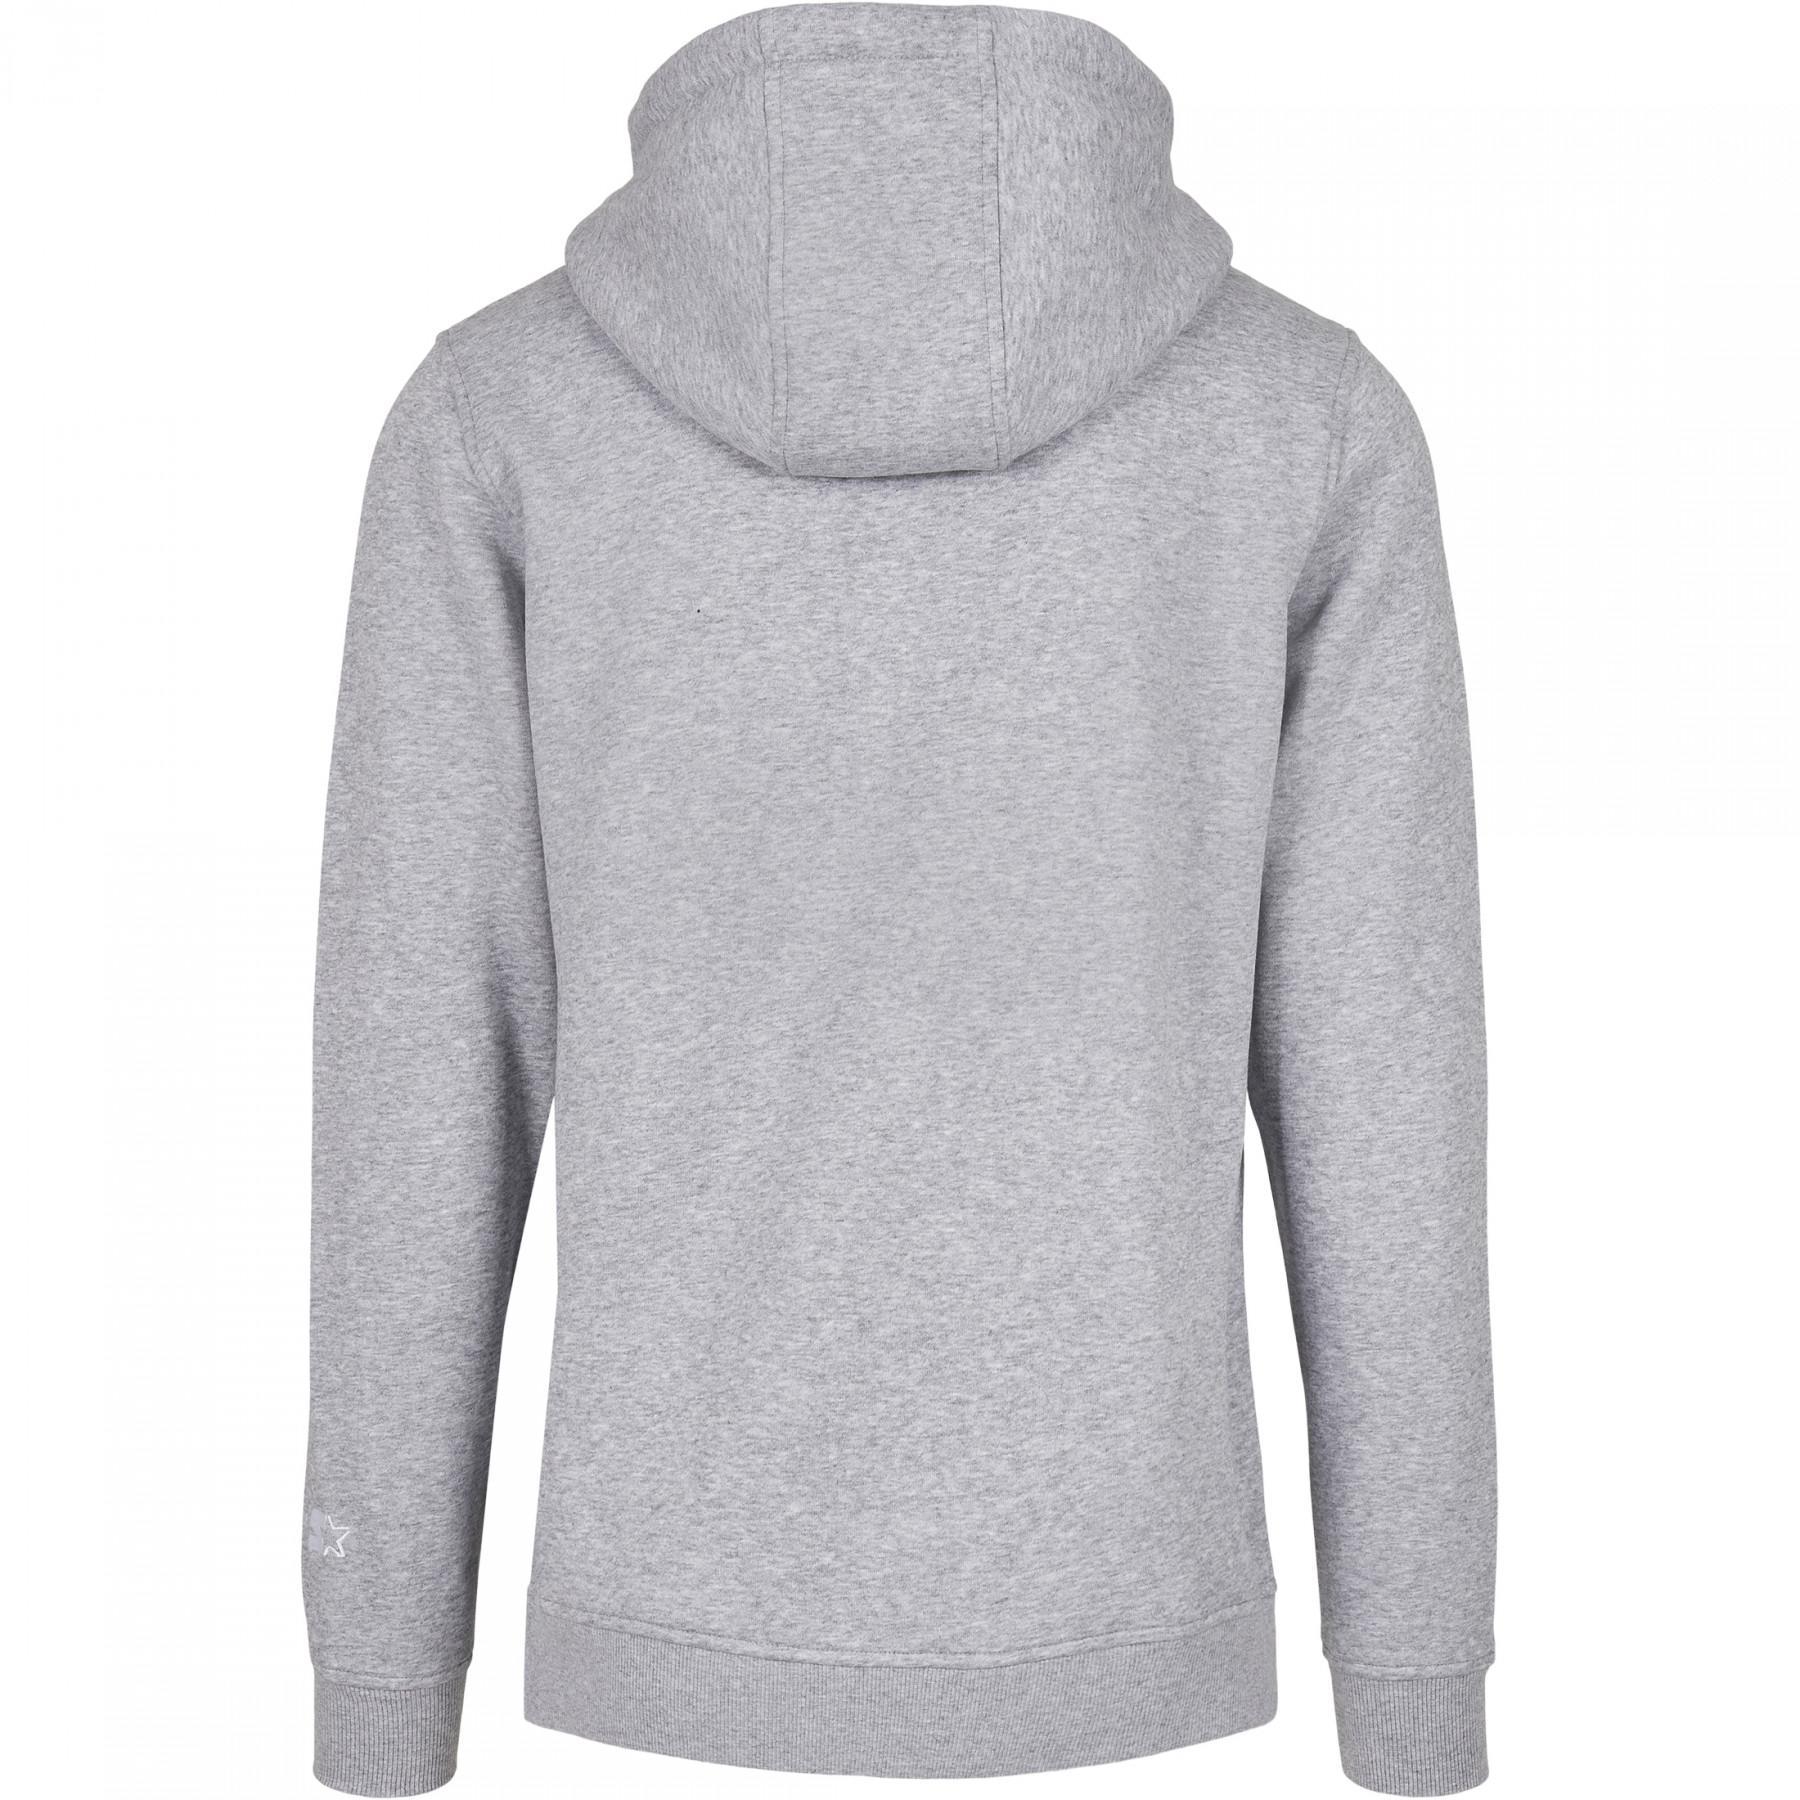 Hooded sweatshirt Urban Classics starter two color logo